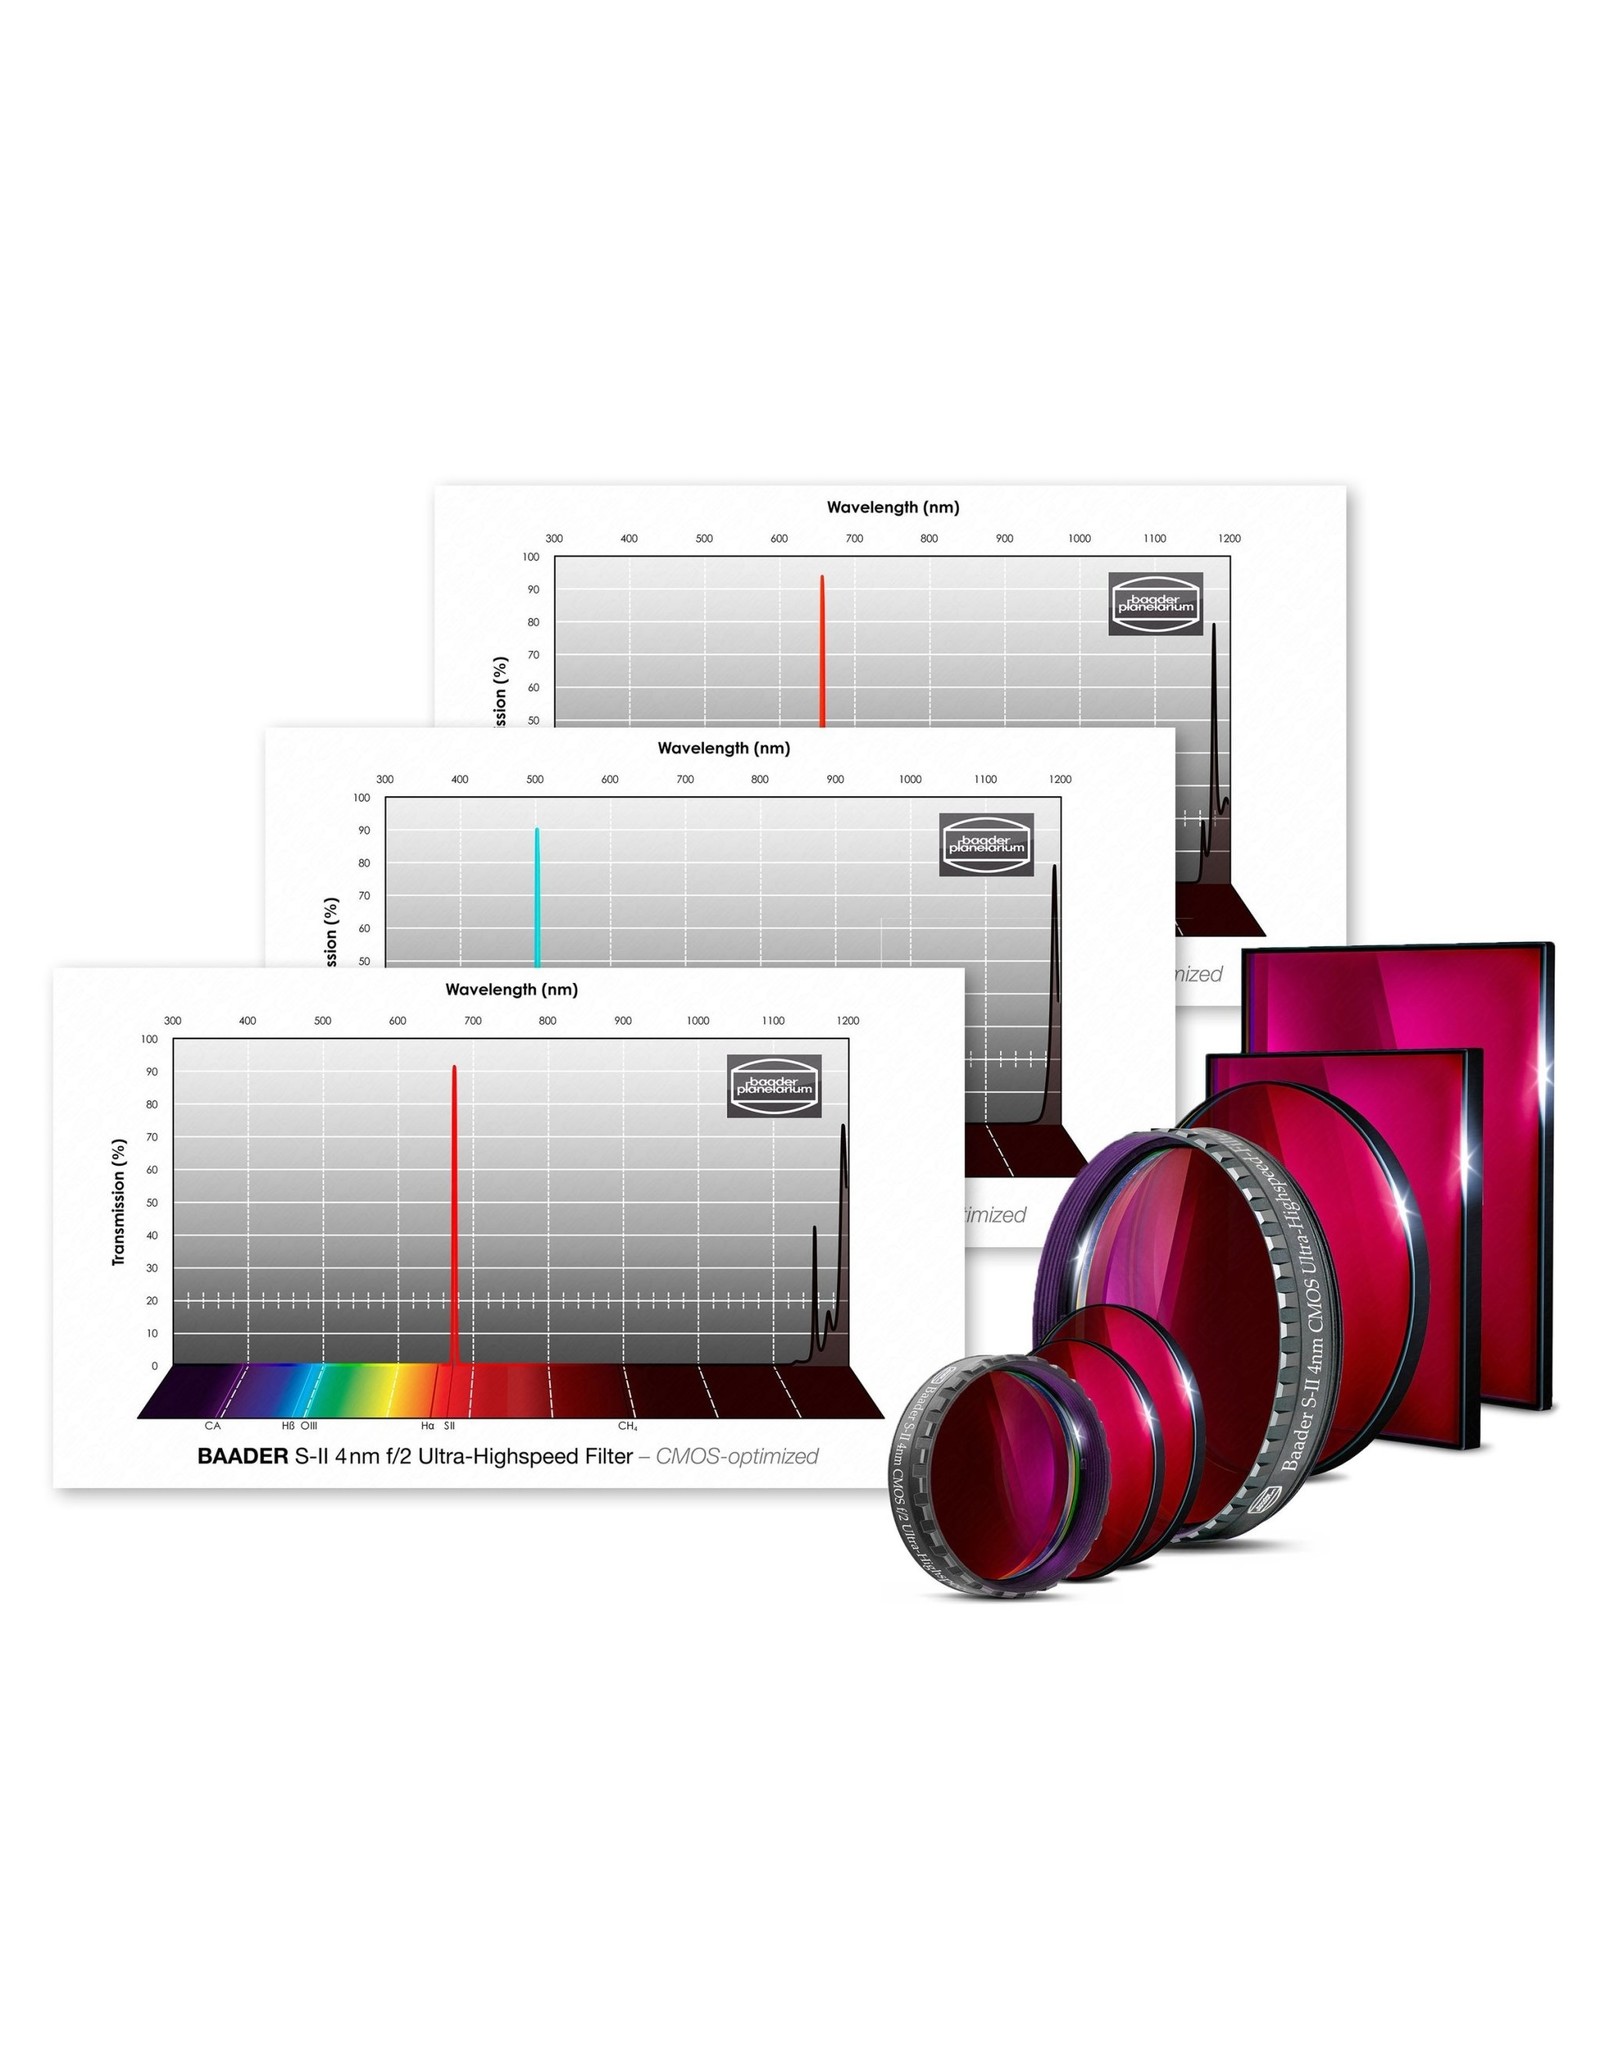 Baader Planetarium Baader 3.5 / 4nm f/2 Ultra-Highspeed Filter set – CMOS-optimized - H-alpha / O-III / S-II (Specify Size)